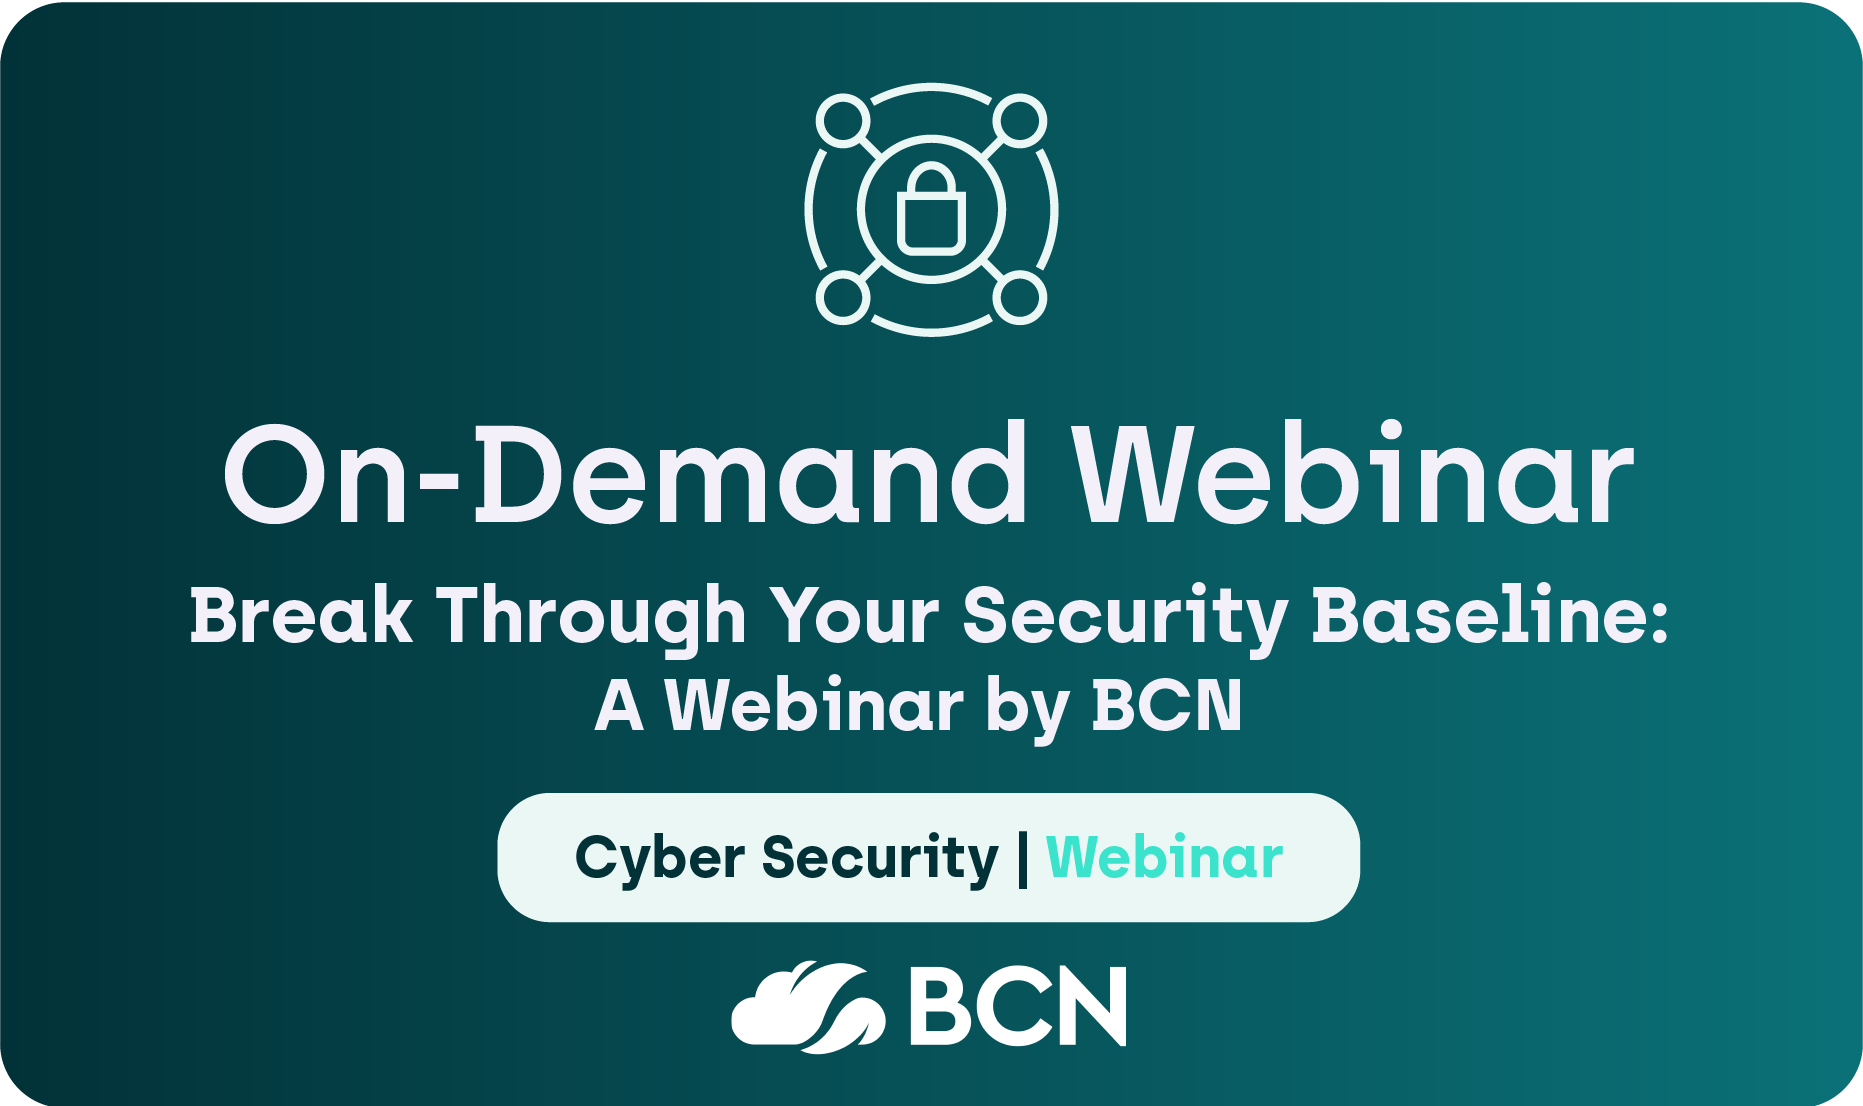 On-Demand Webinar: Break Through Your Security Baseline